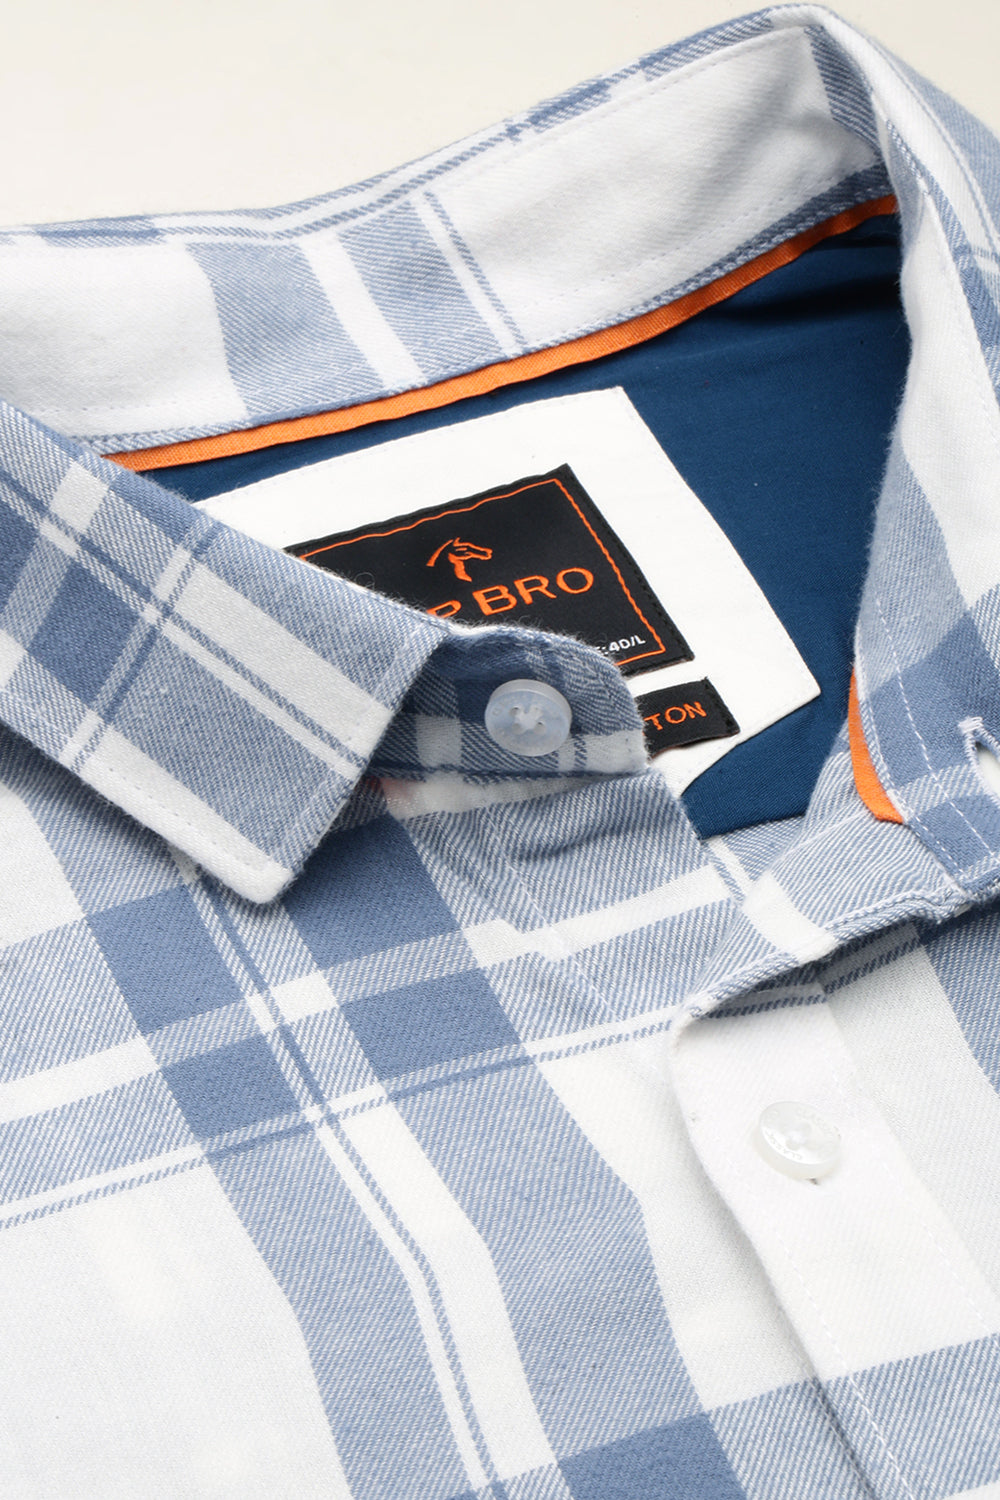 CP BRO Men's Cotton Full Sleeve Checked Slim Fit Polo Neck White Color Woven Shirt | Sbo1-53 A